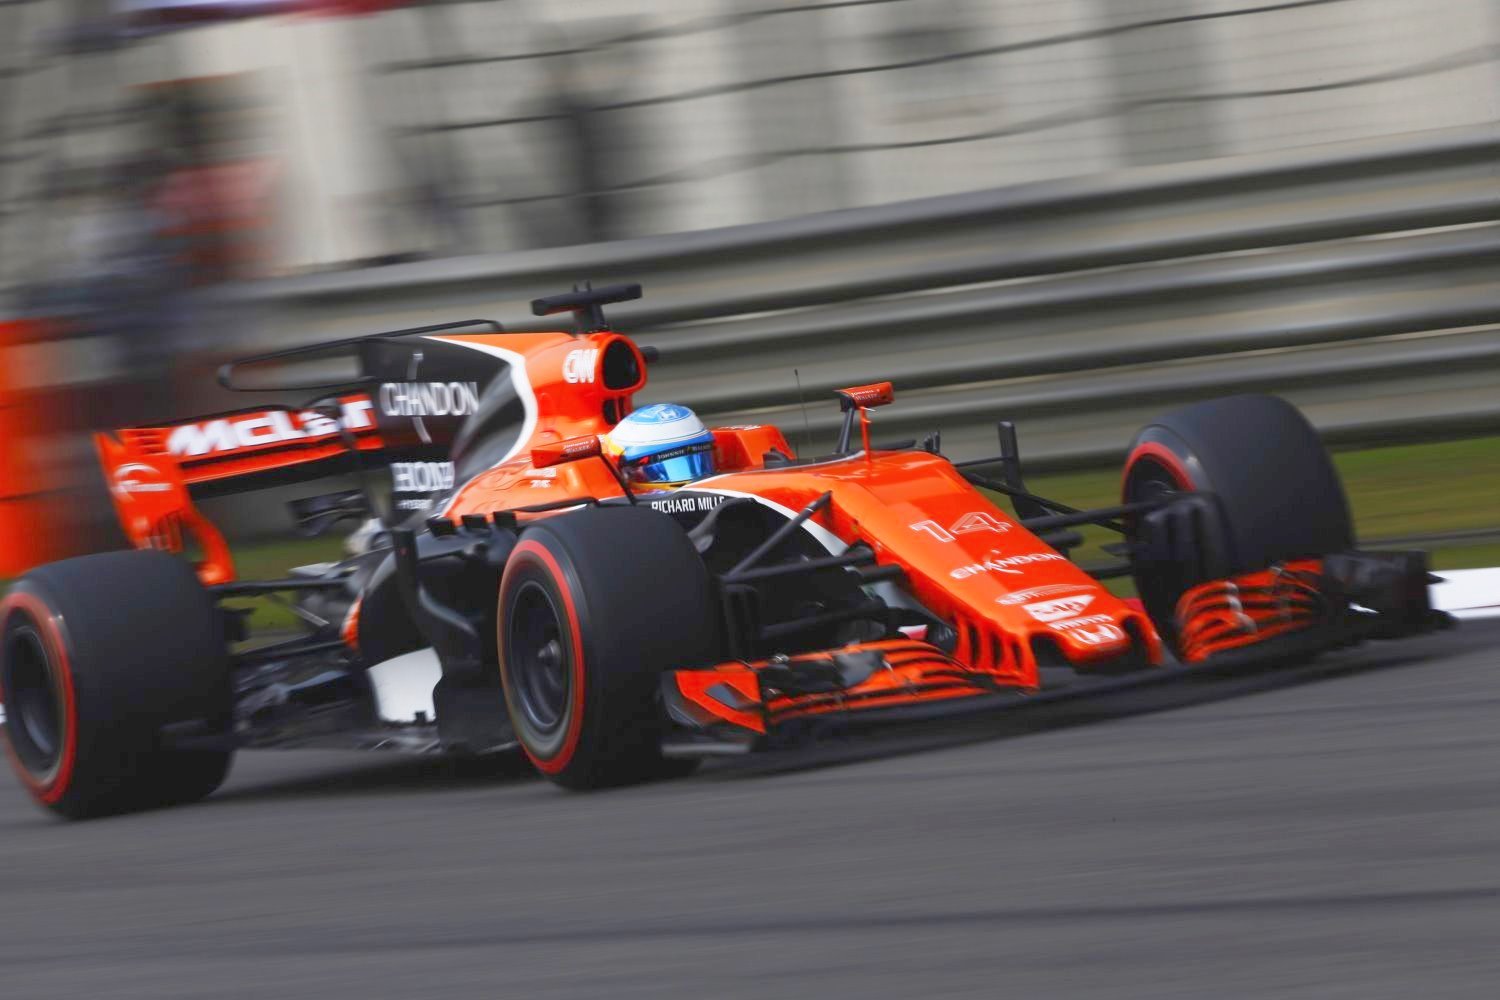 Alonso again beat teammate Vandoorne in China qualifying